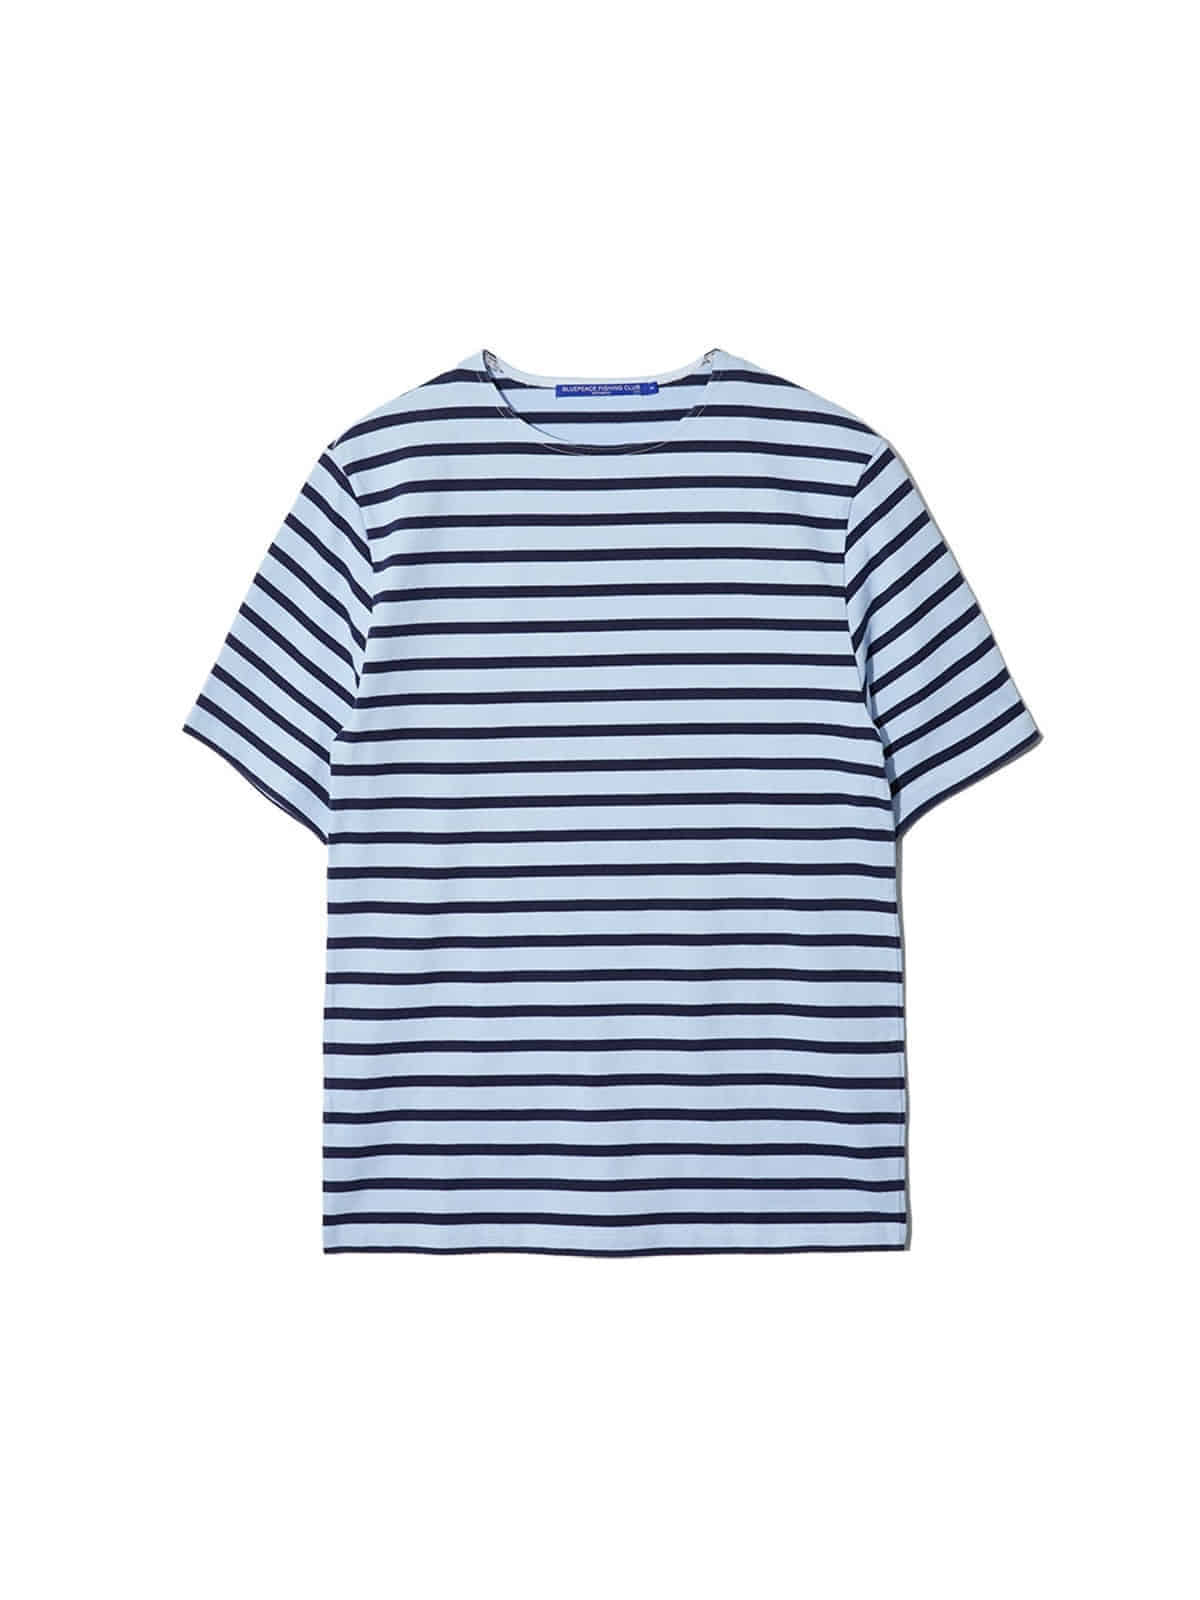 Garment Dyed Stripe S/S T-Shirt (Navy Stripe)